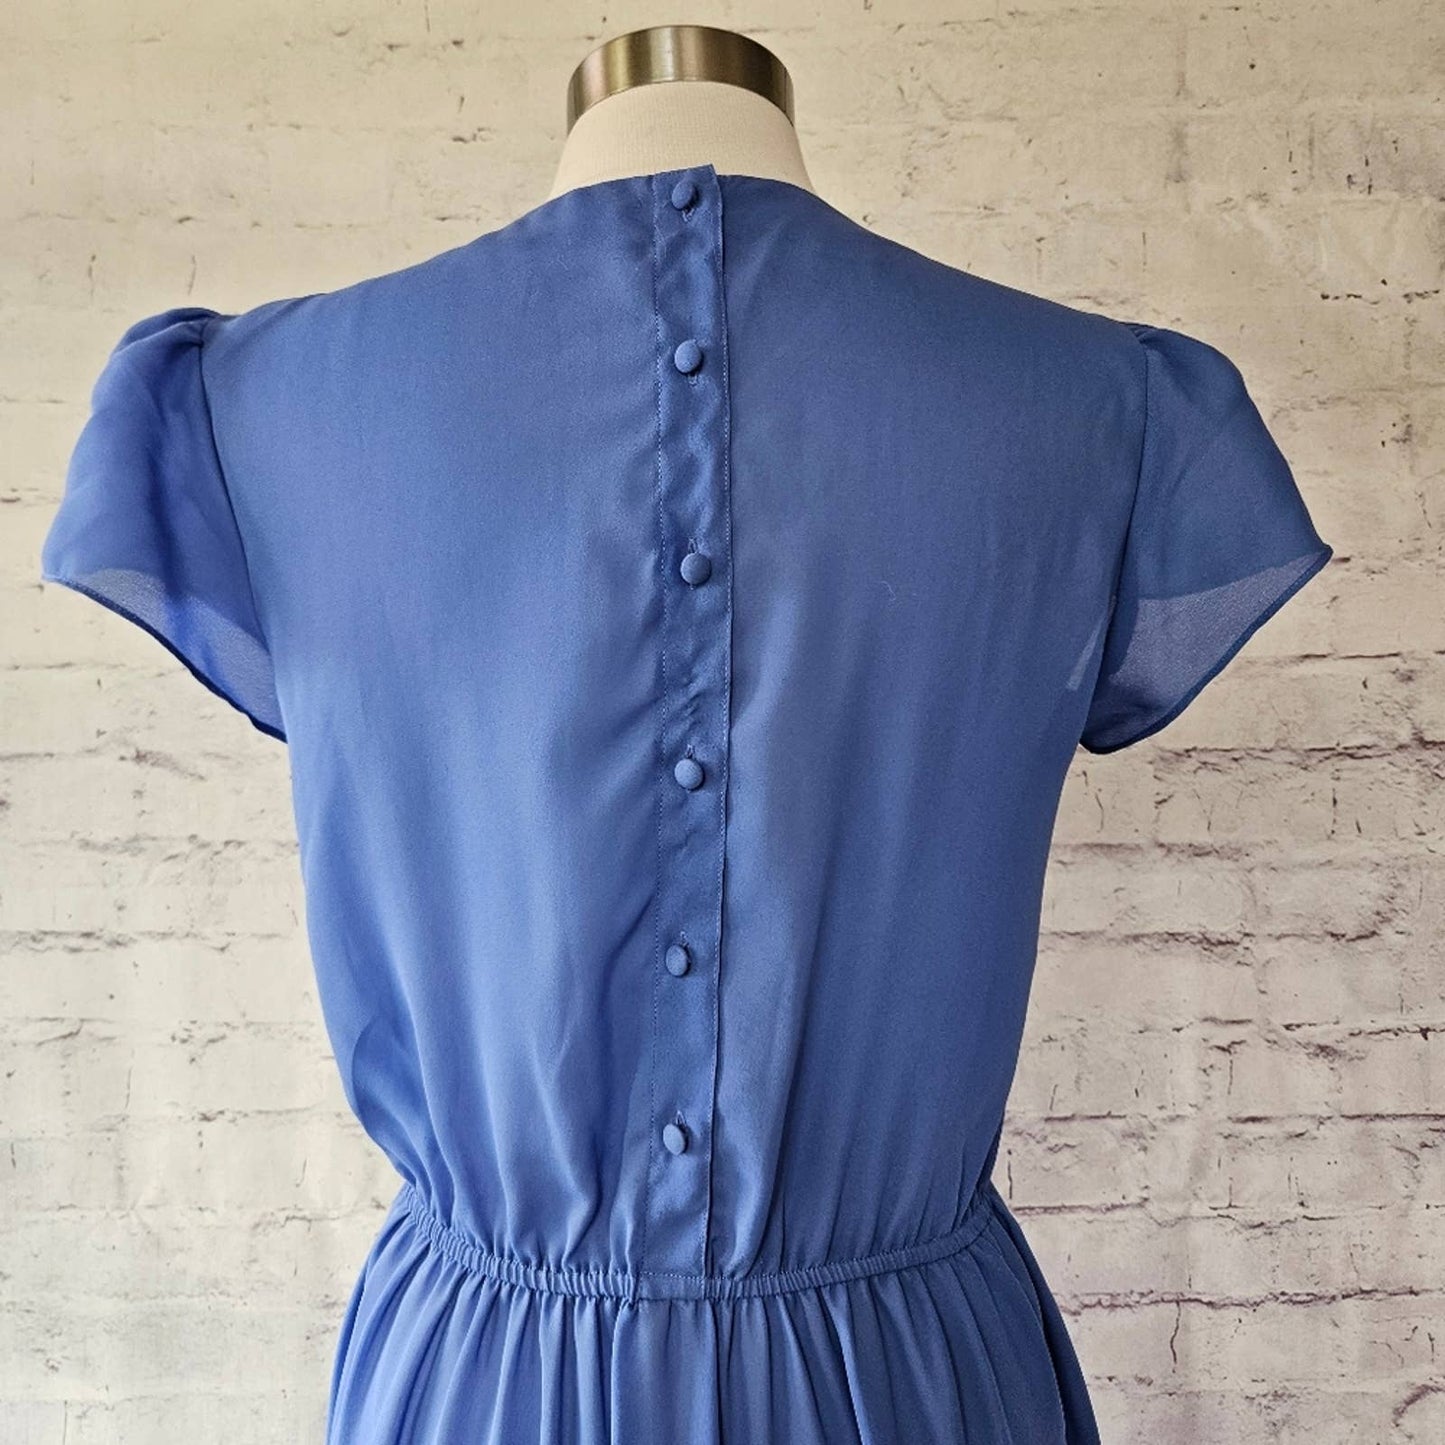 Vintage 80s Townhouse Sheer Blue Cap Sleeve Midi Dress